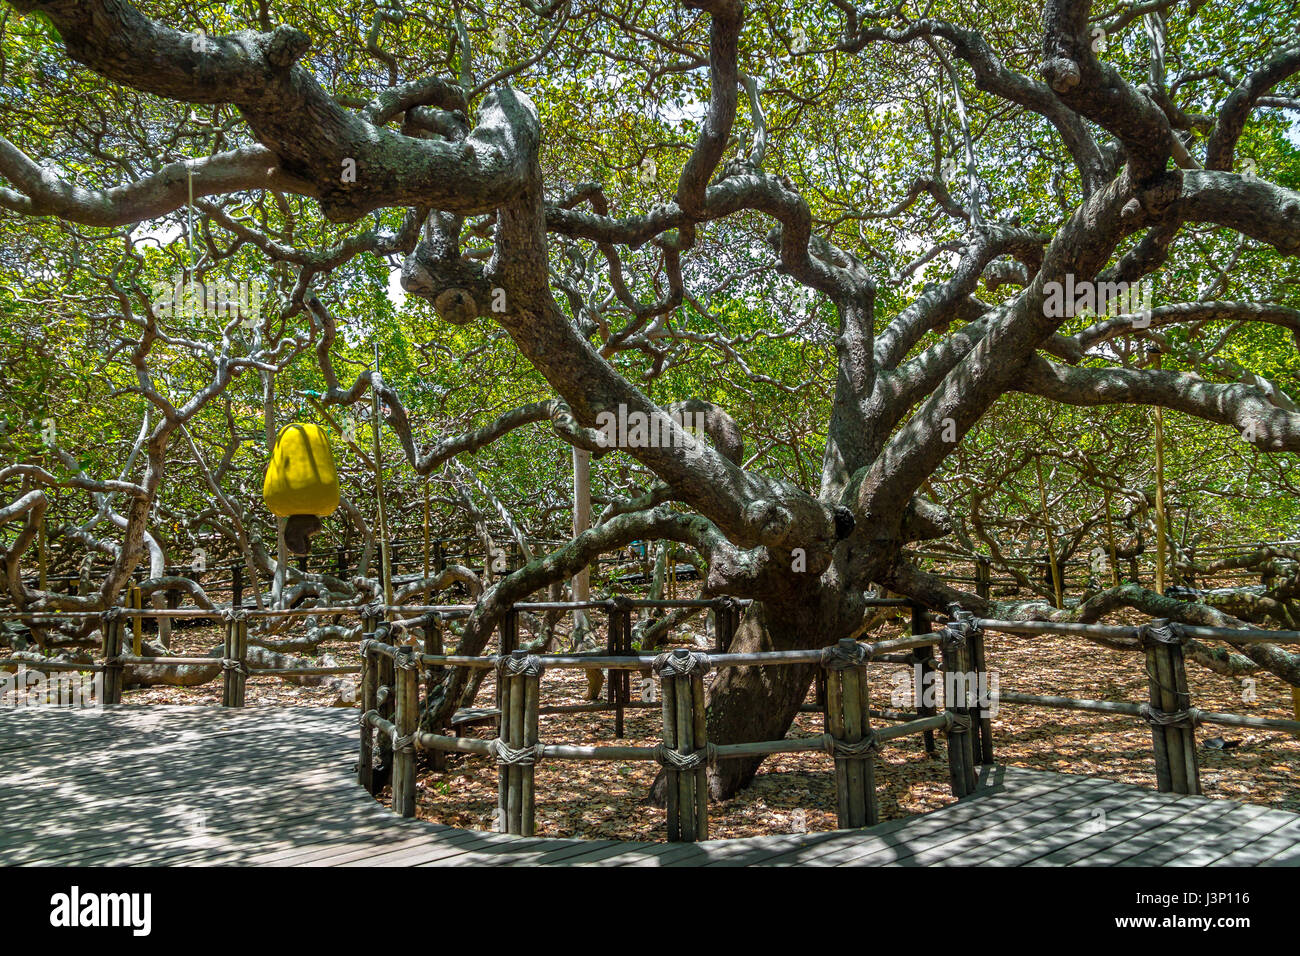 World's Largest Cashew Tree - Pirangi, Rio Grande do Norte, Brazil Stock Photo